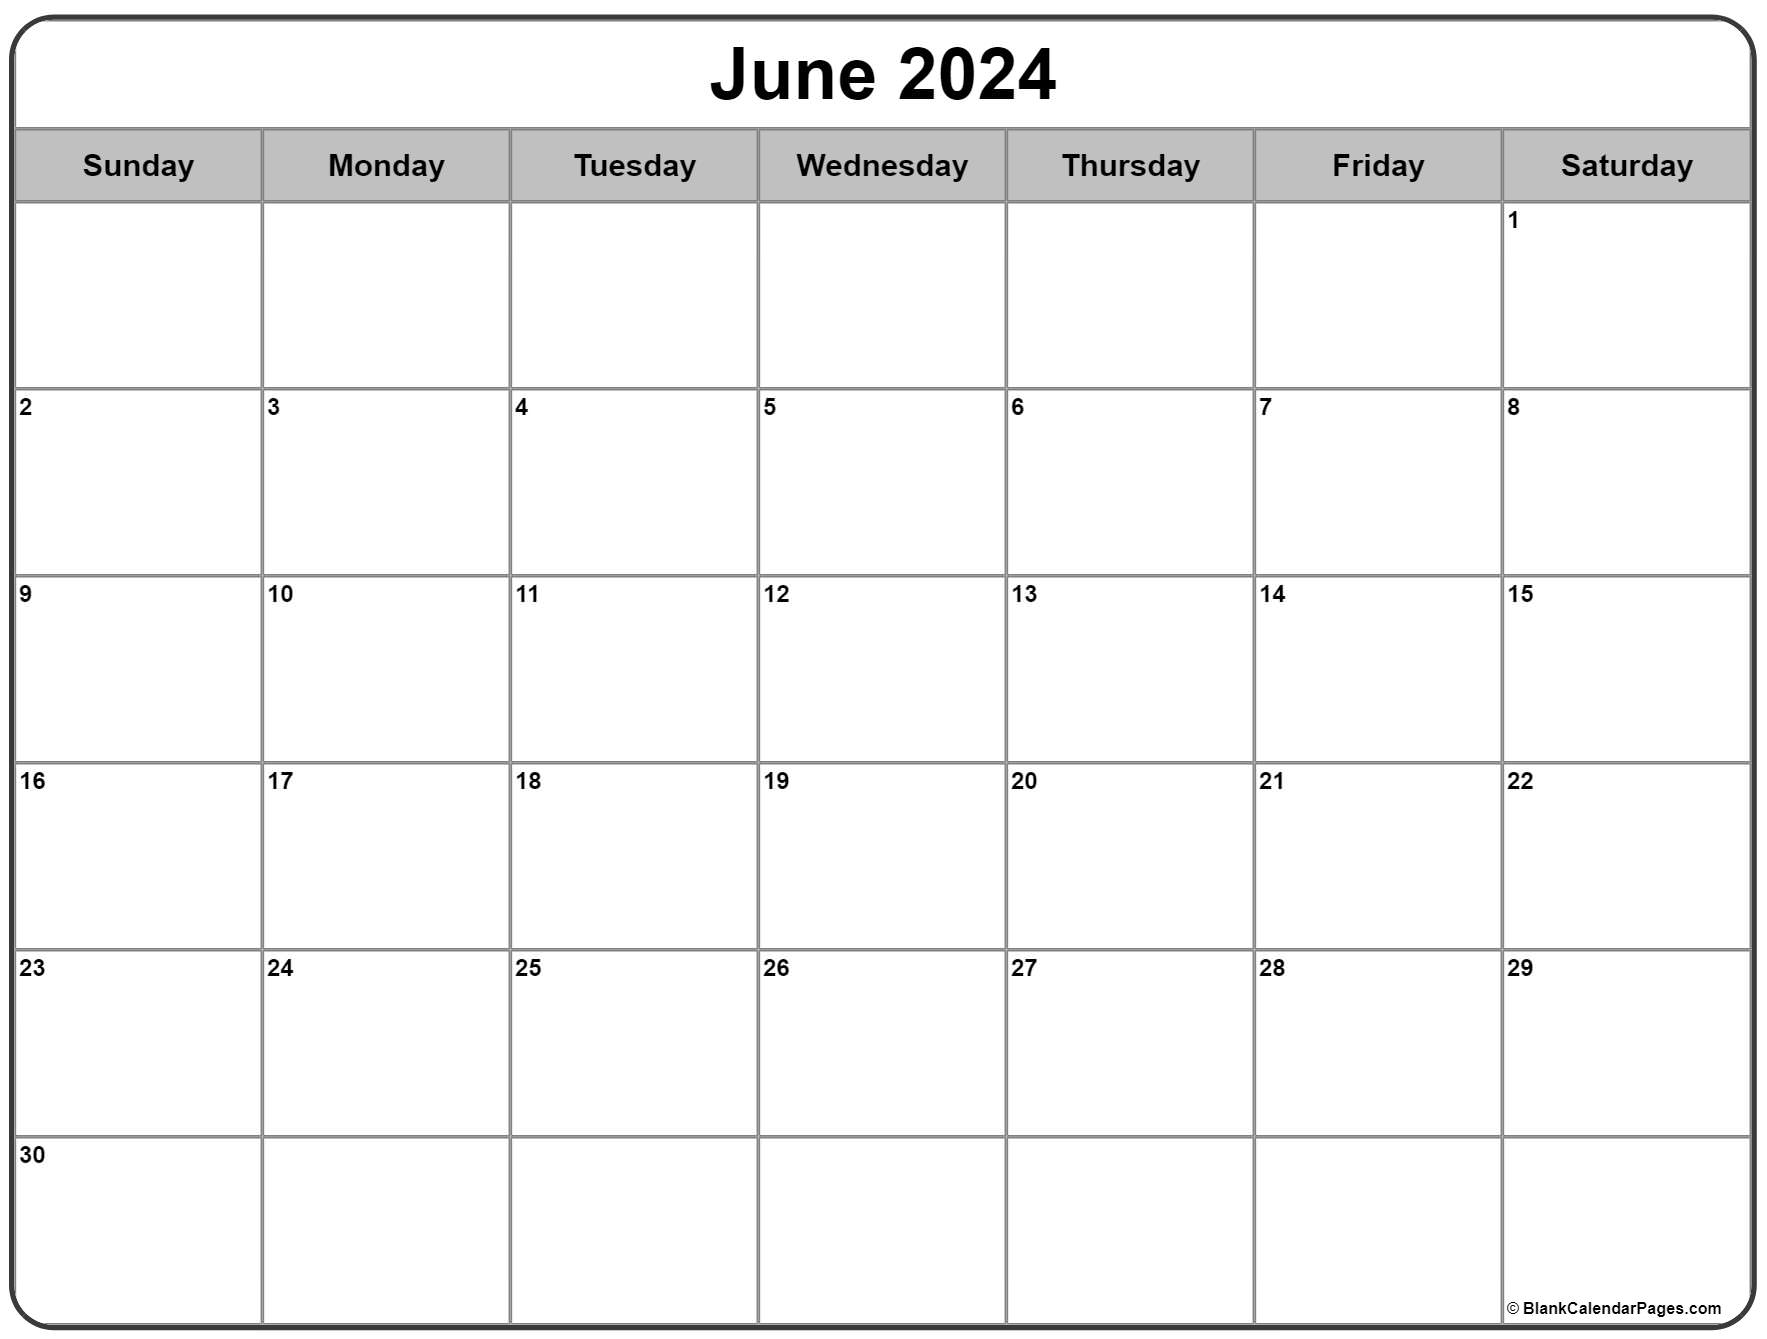 Календарь 2024. Календарь май 2024 года. Календарь 2024 для заметок. Календарь 2024 / Calendar 2024. Календарь апрель май июнь 2024 года